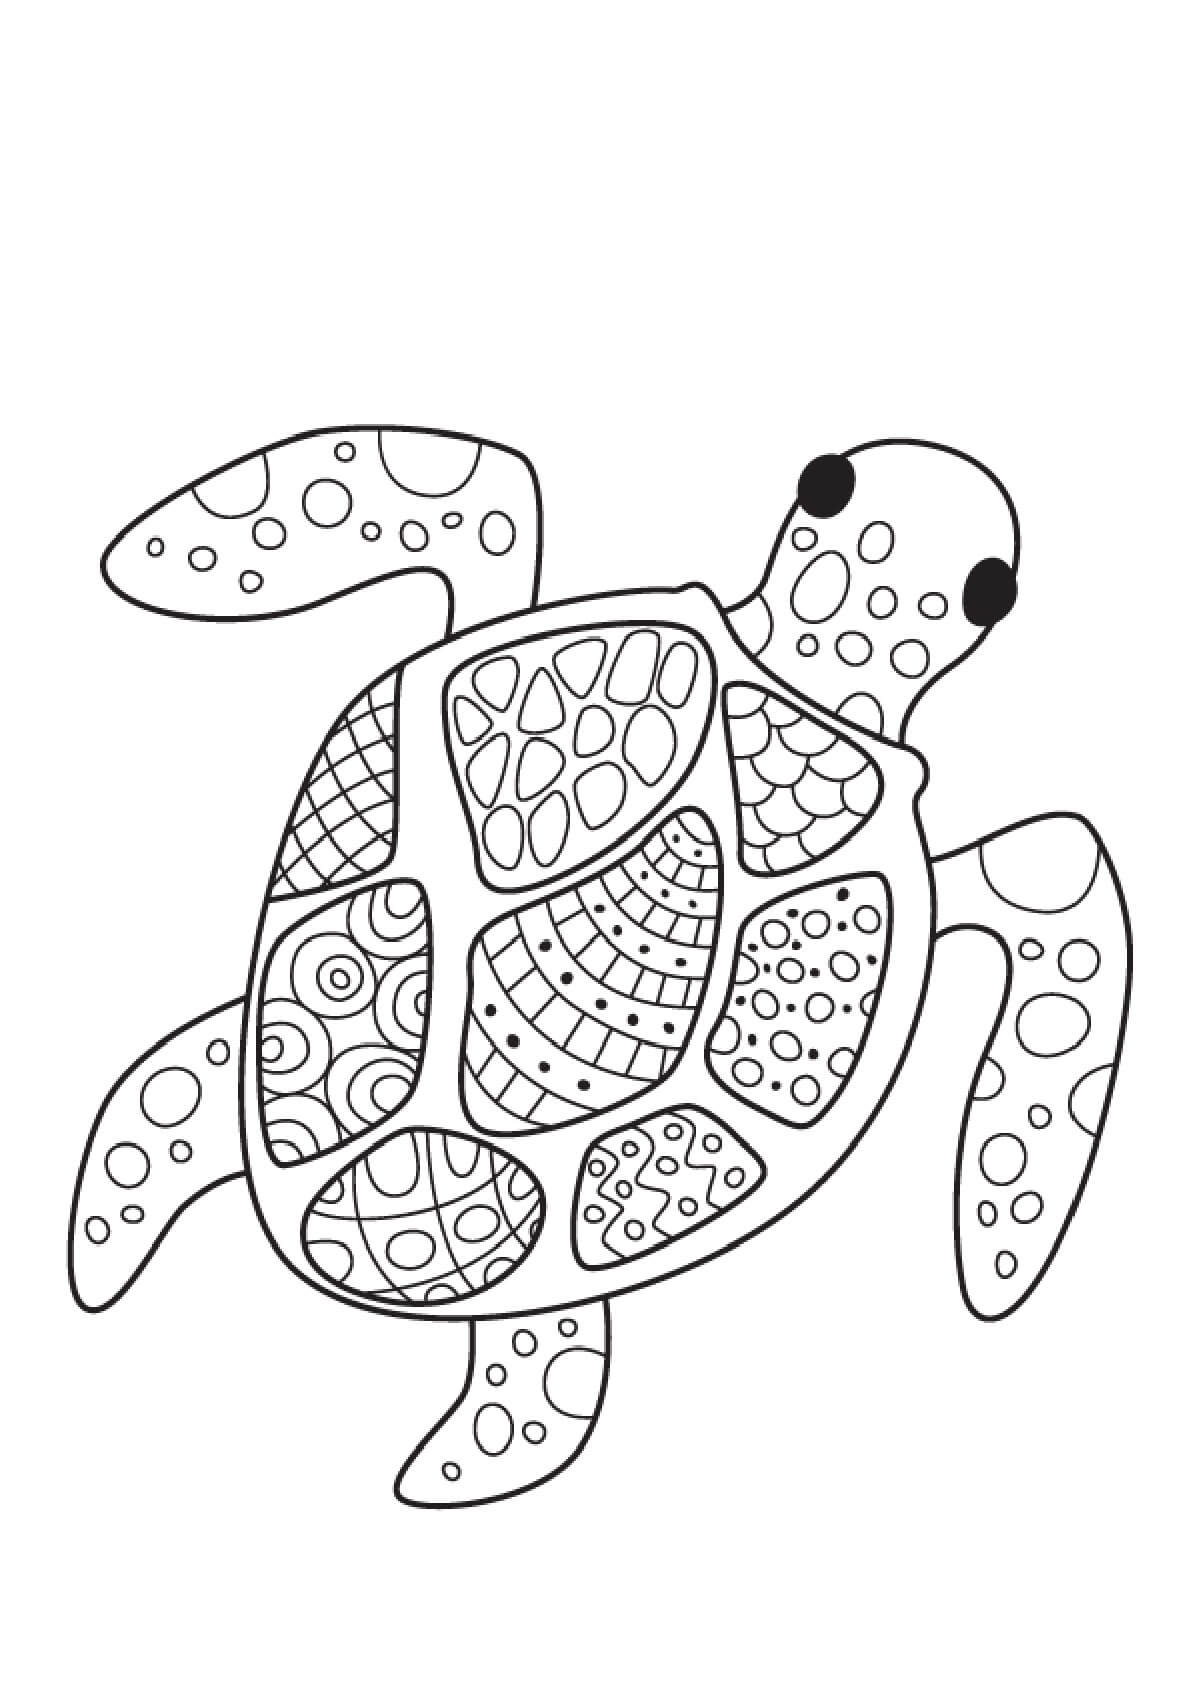 Mandala Turtle Coloring Page - Sheet 9 Mandalas